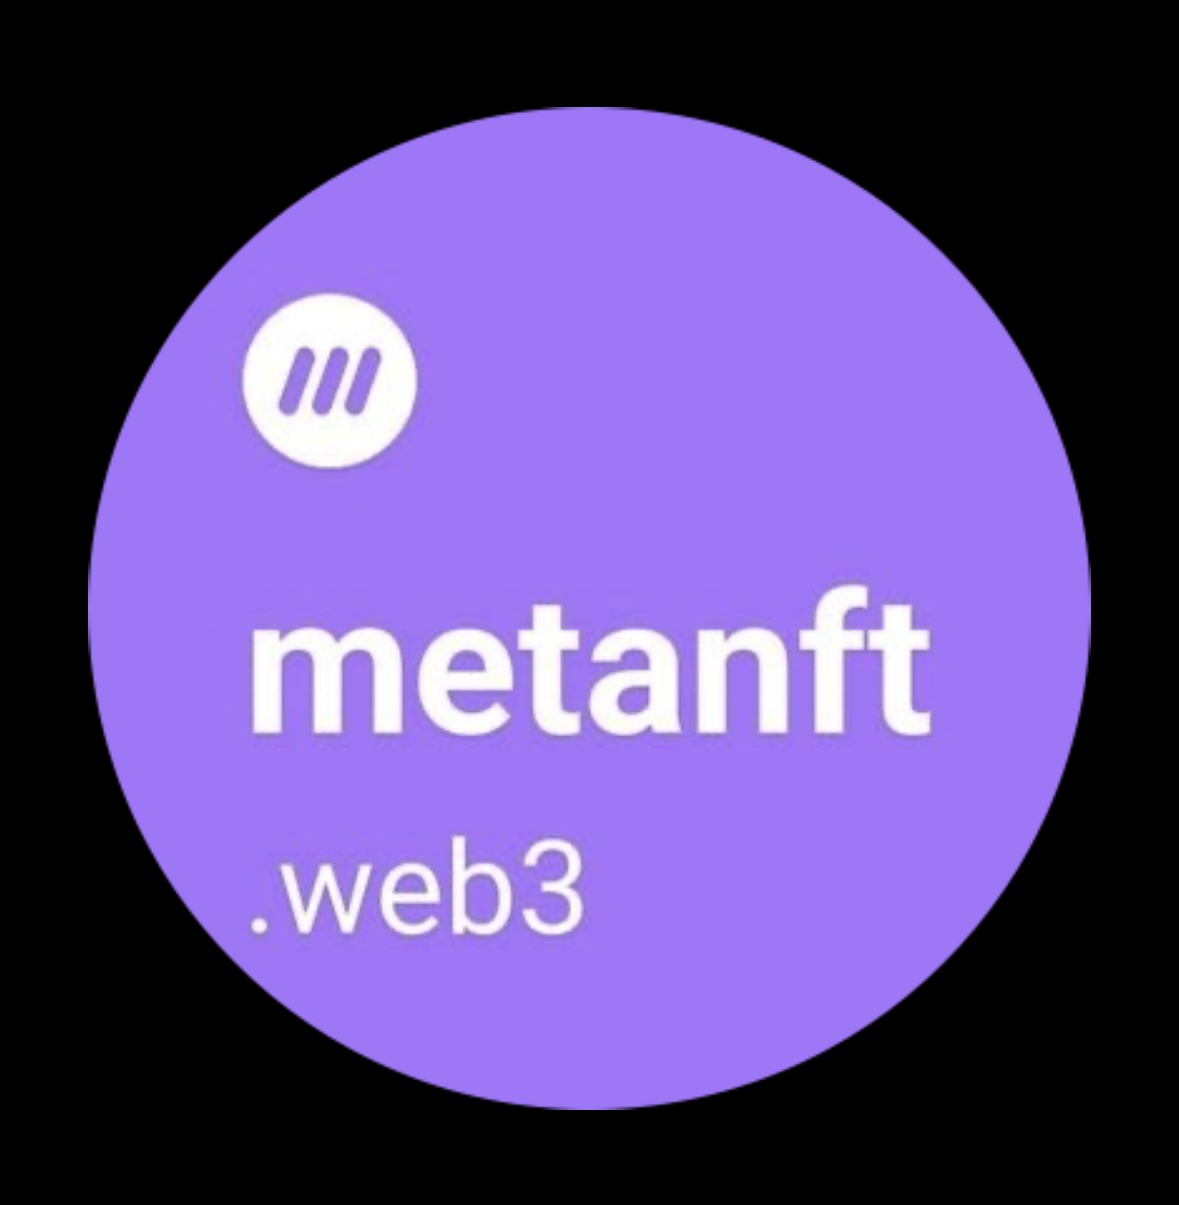 metanftweb3